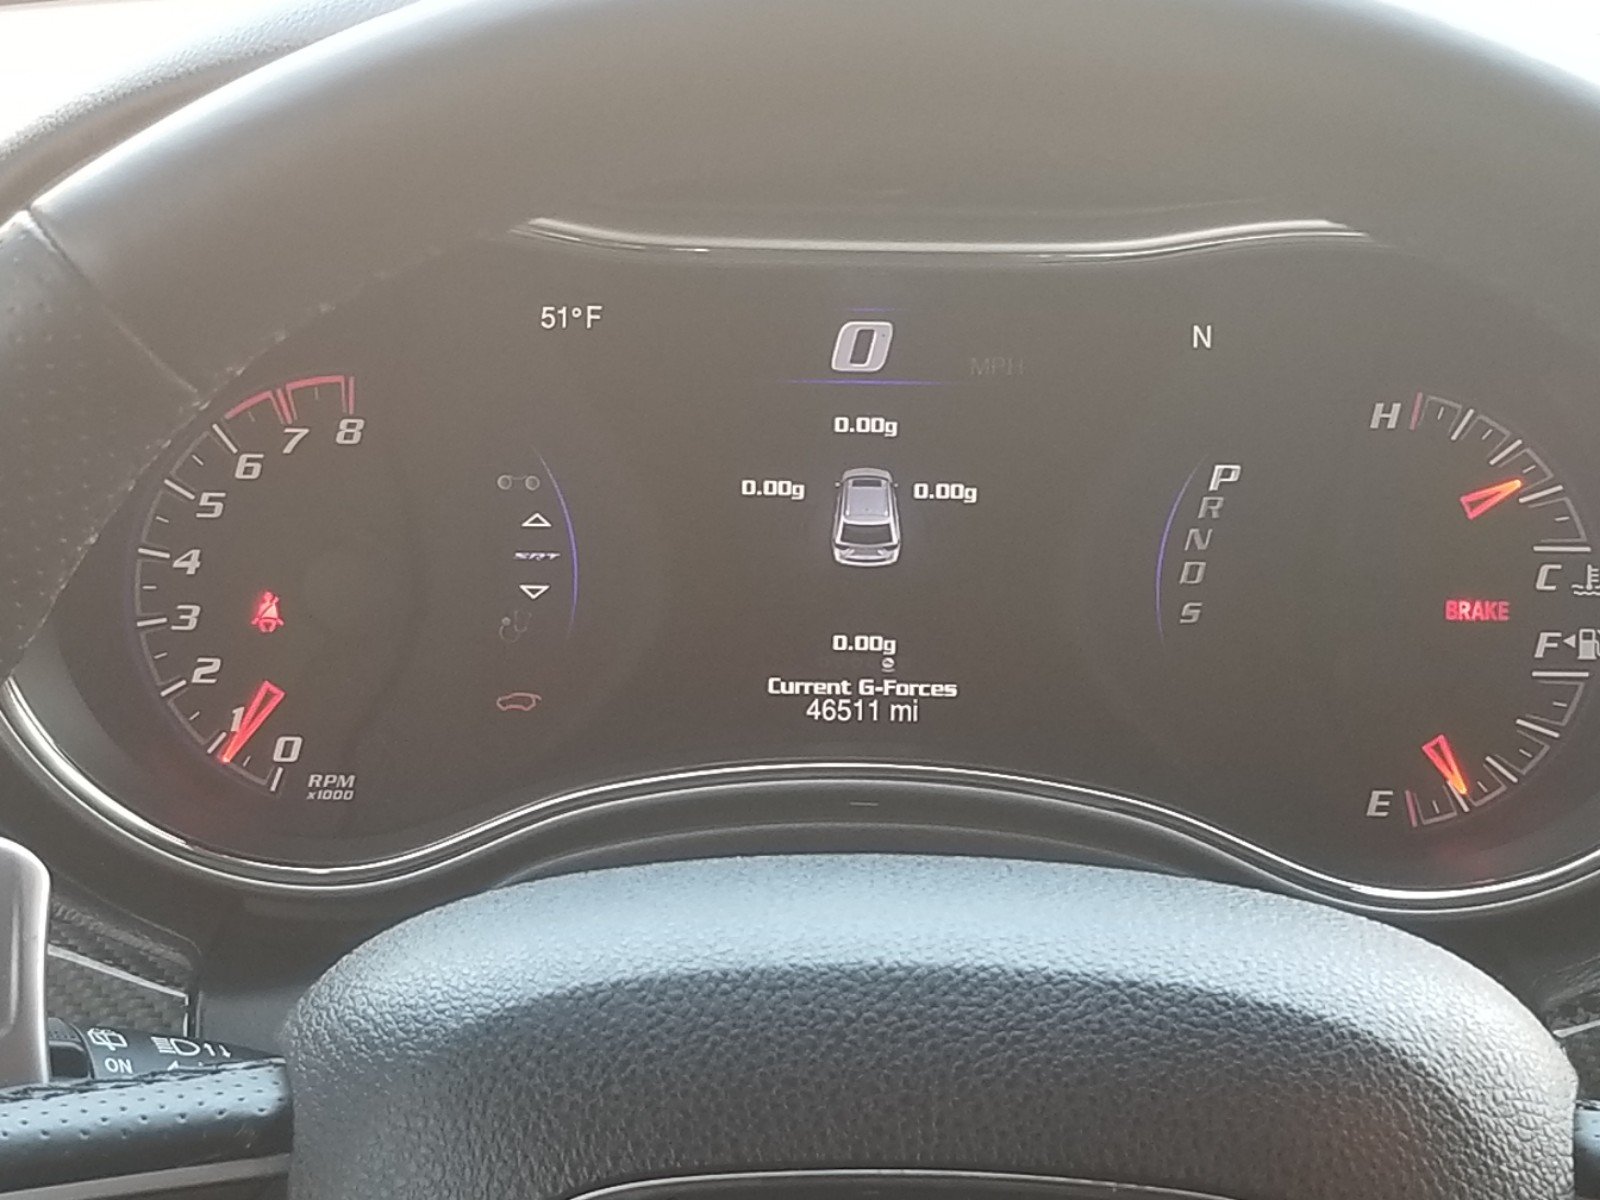 2014 jeep grand cherokee navigation display not correct